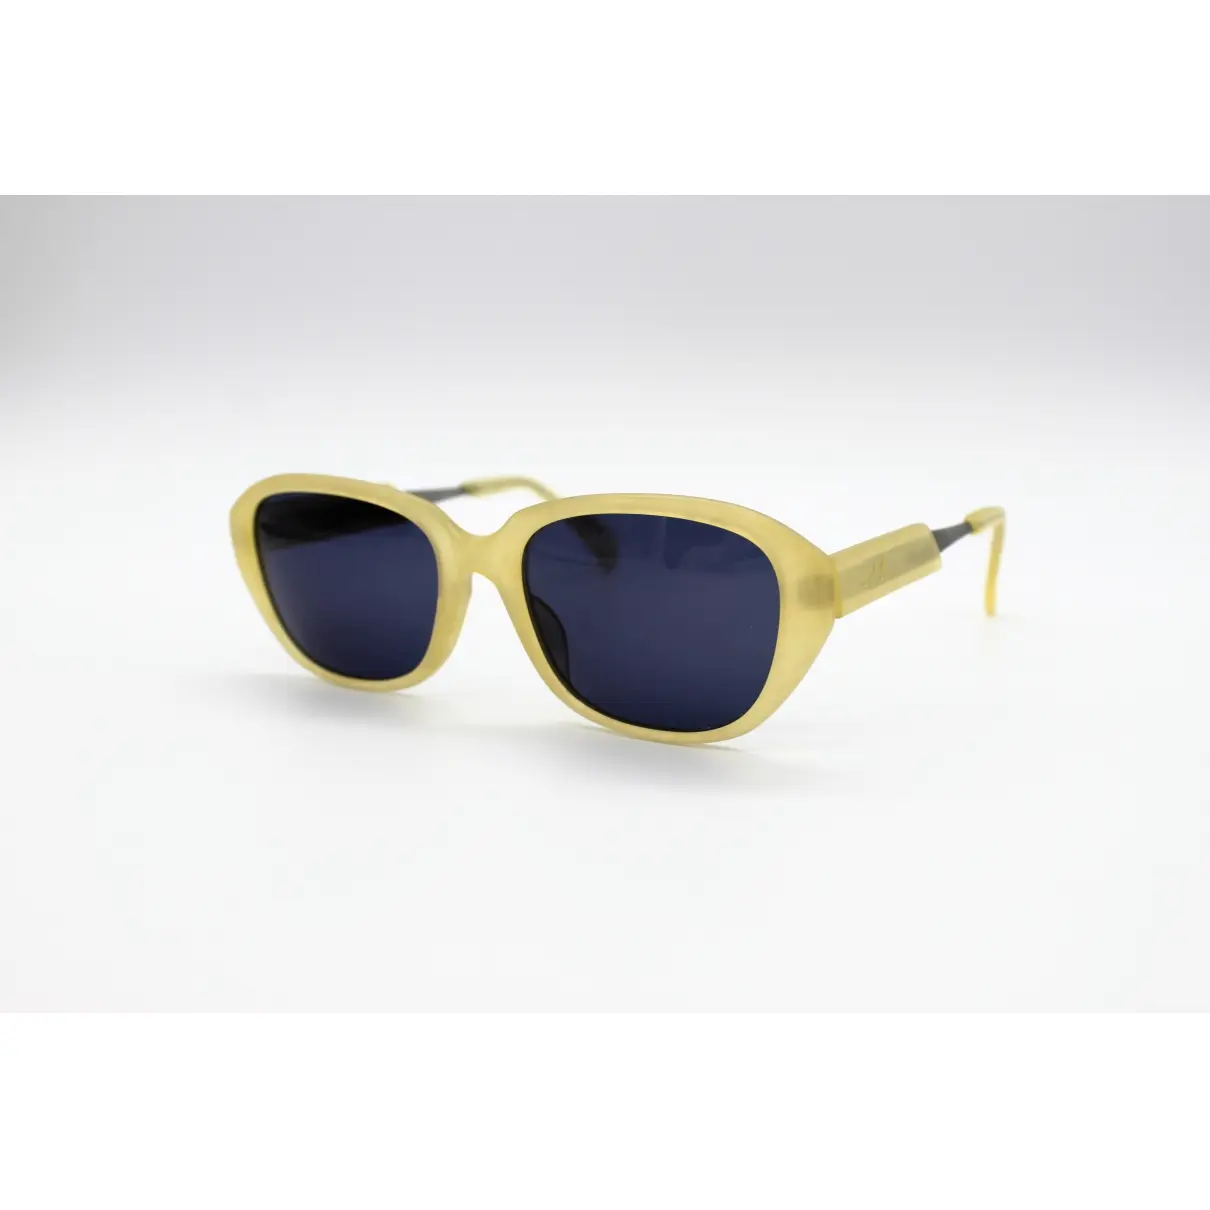 Buy Jean Paul Gaultier Oversized sunglasses online - Vintage